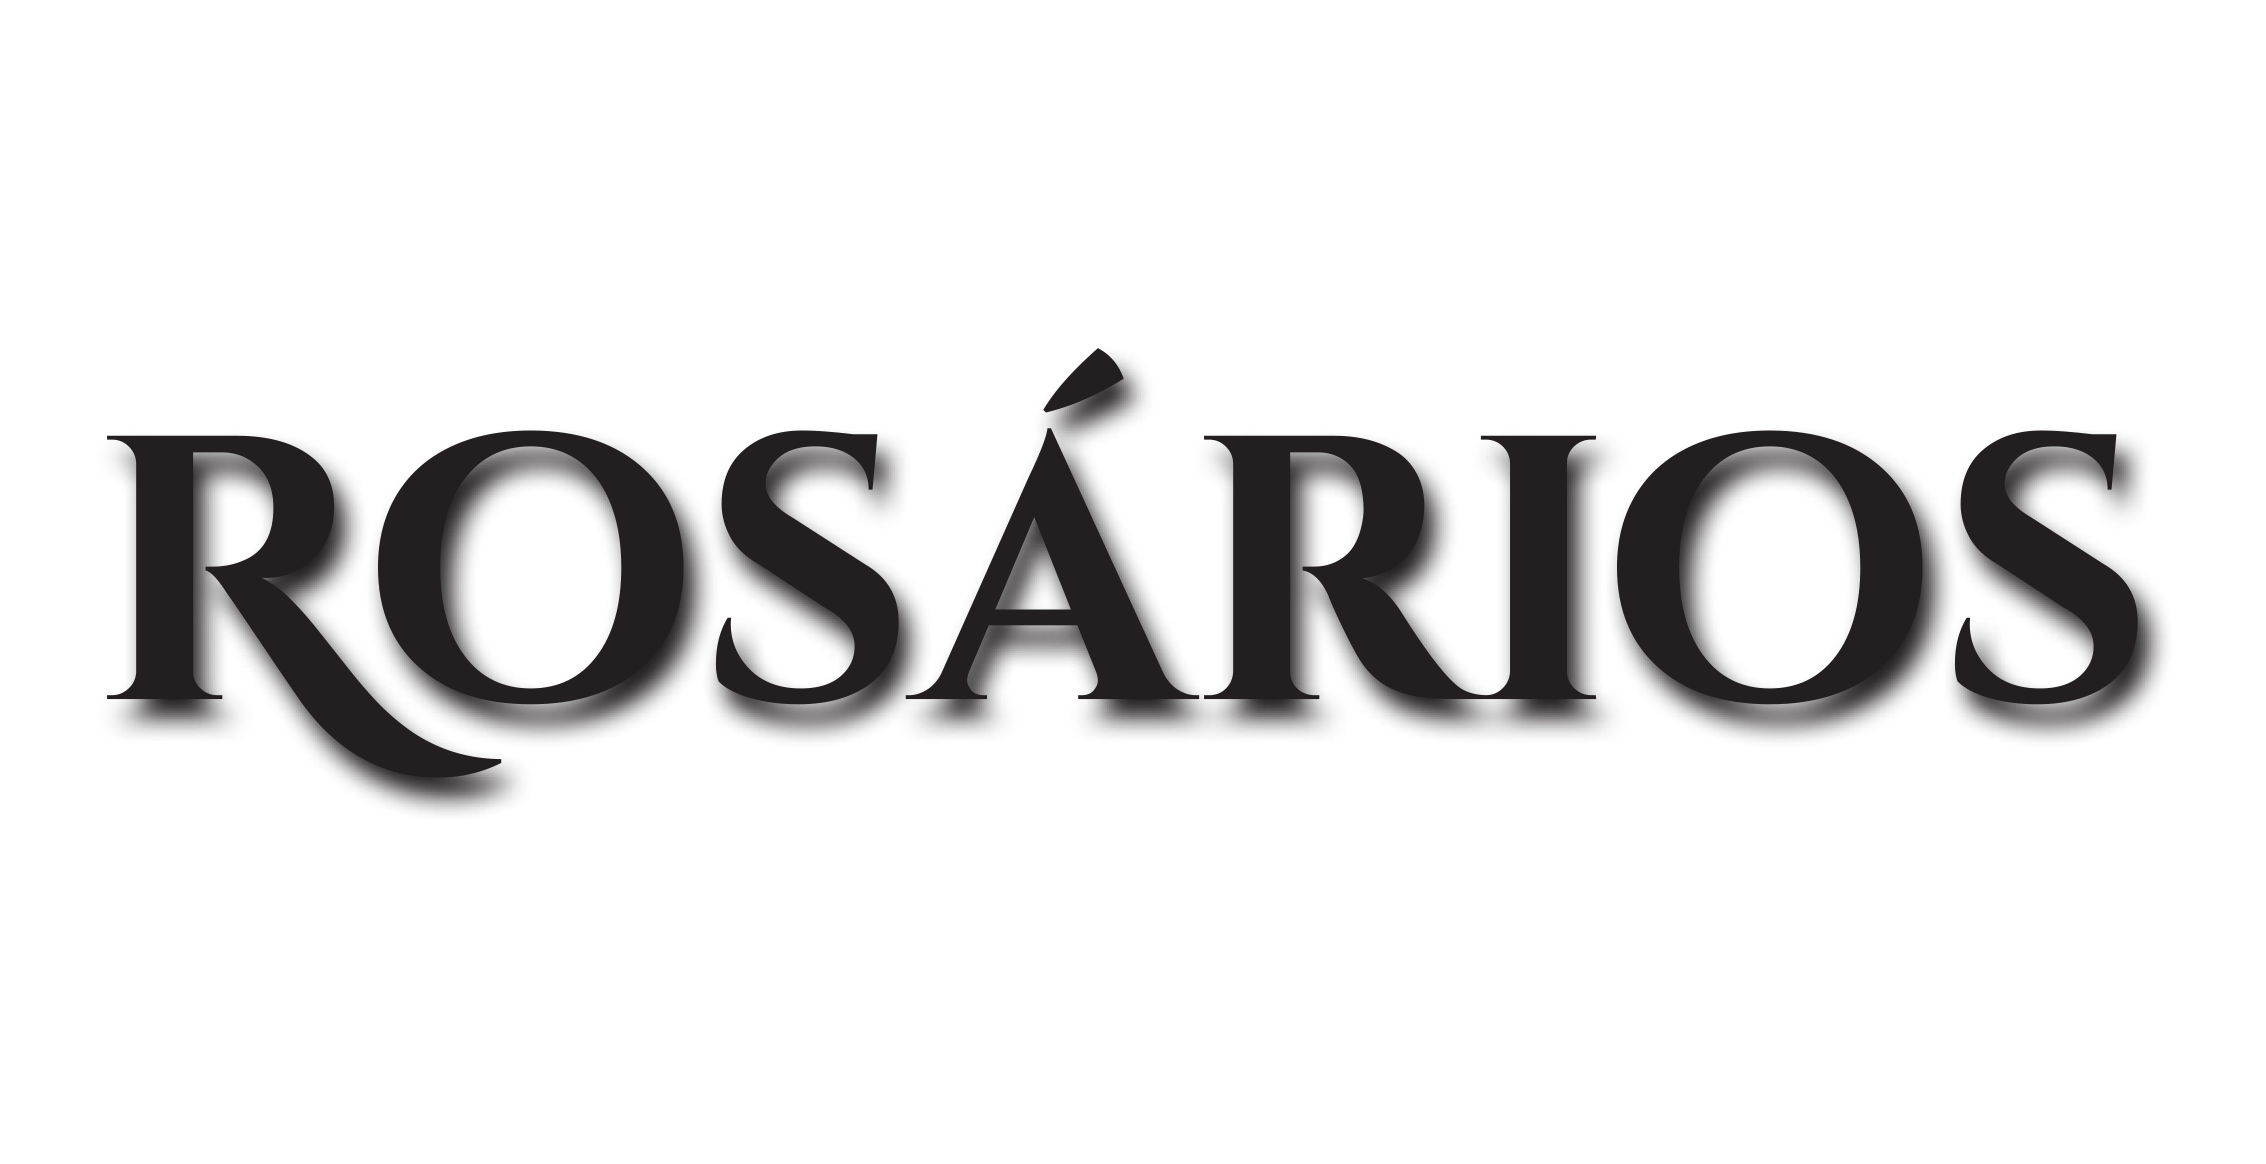 Logo Rosarios